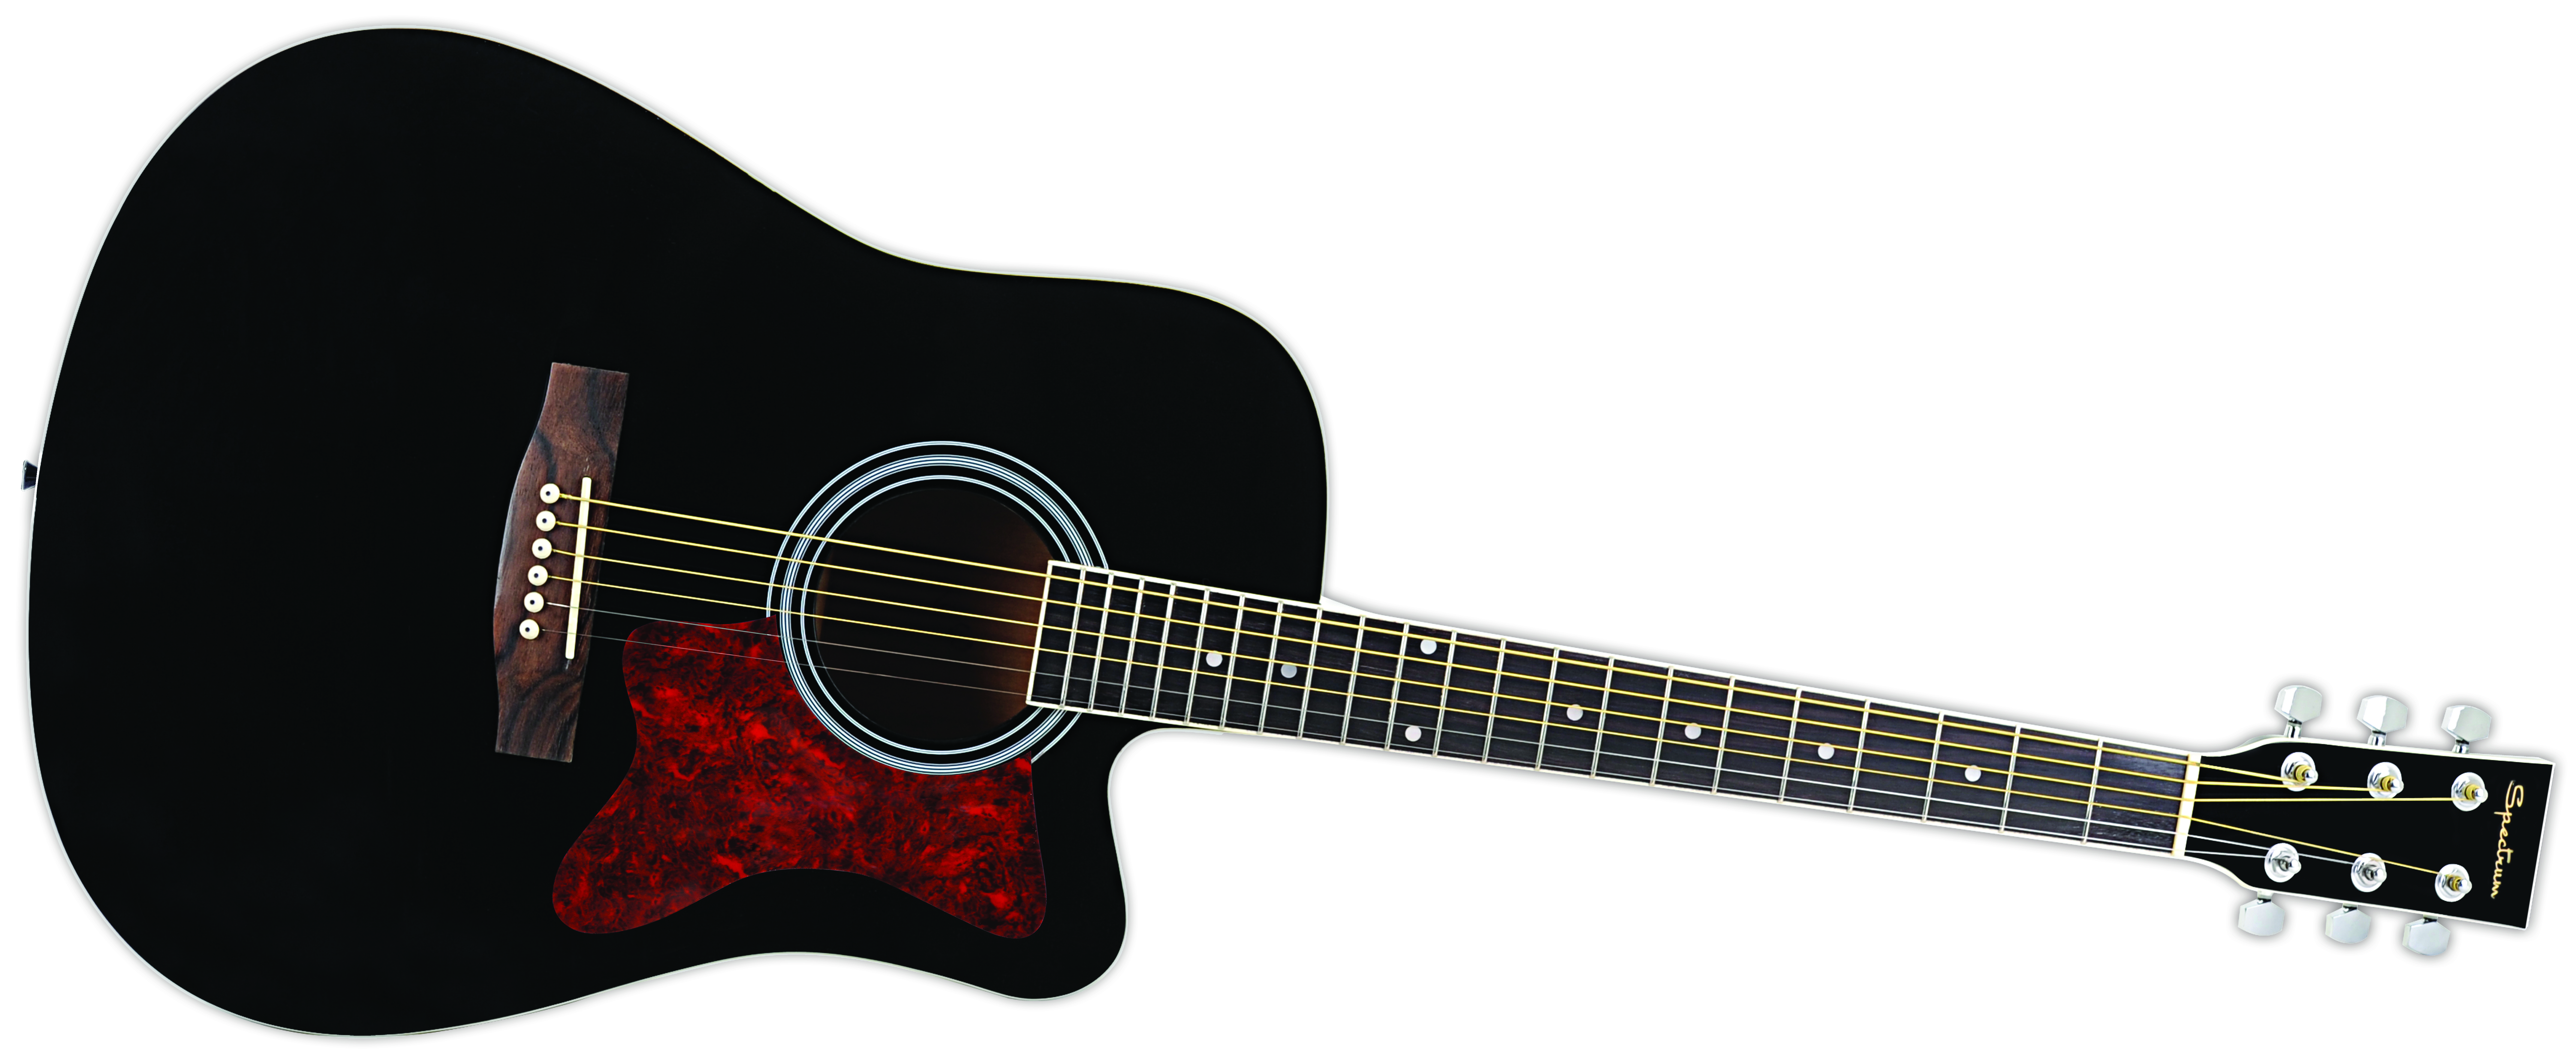 Spectrum AIL-128 Full Size Black Cutaway Acoustic Guitar - Walmart.com